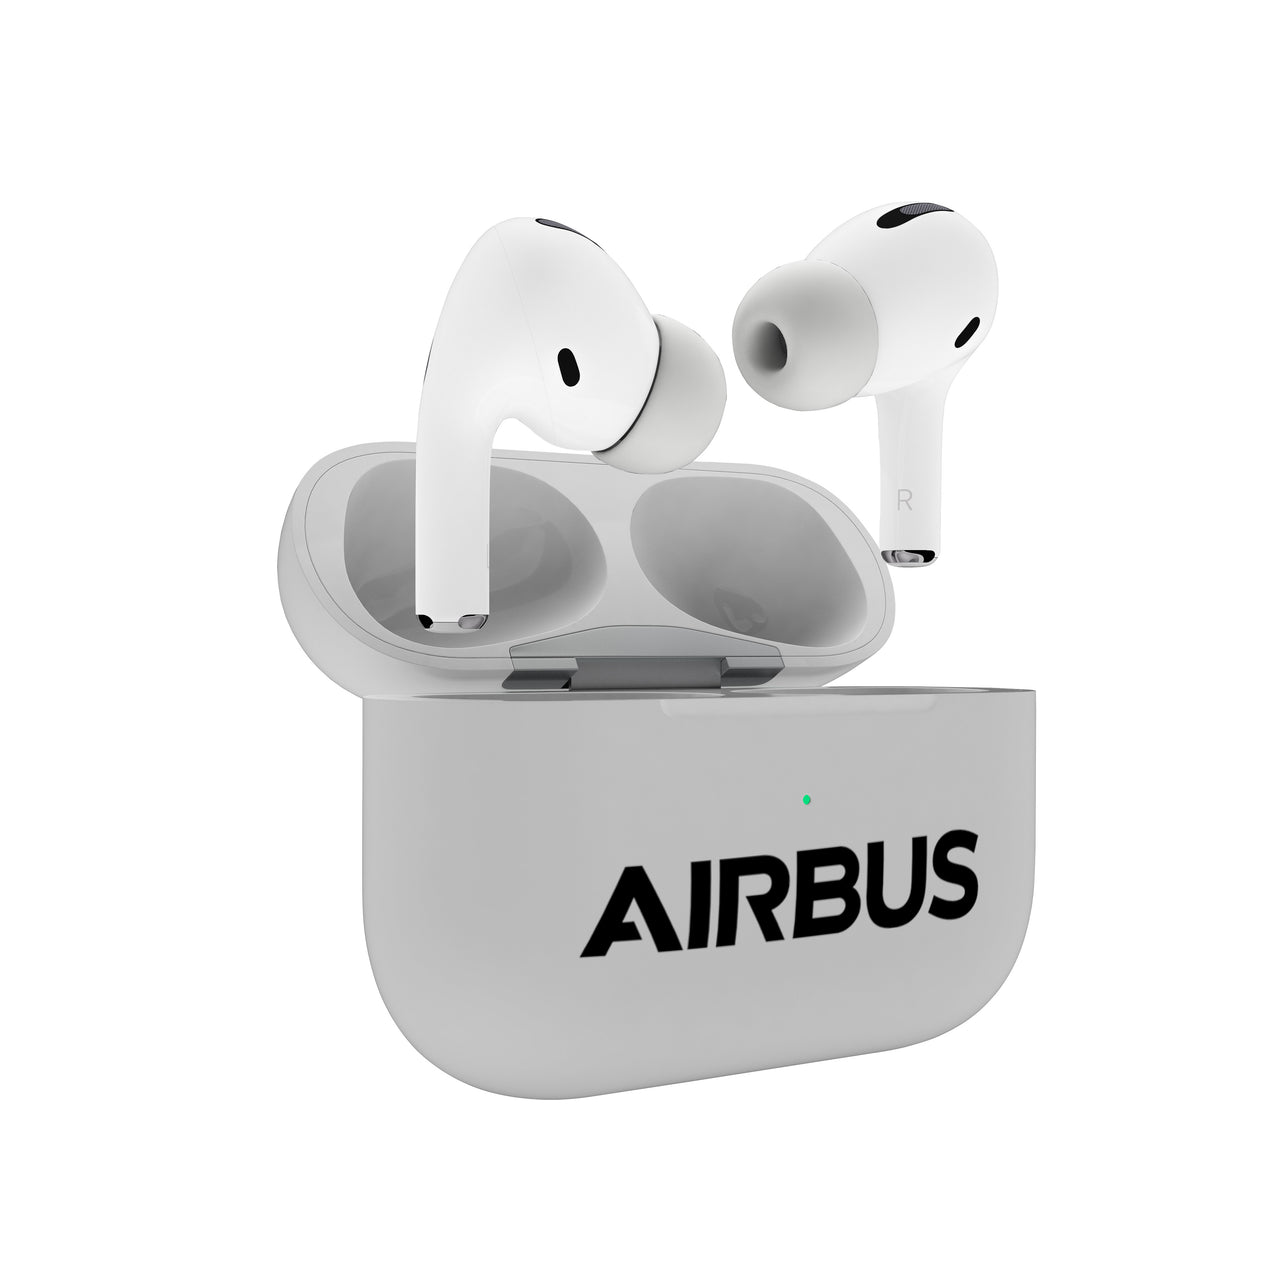 Airbus & Text Designed AirPods "Pro" Cases